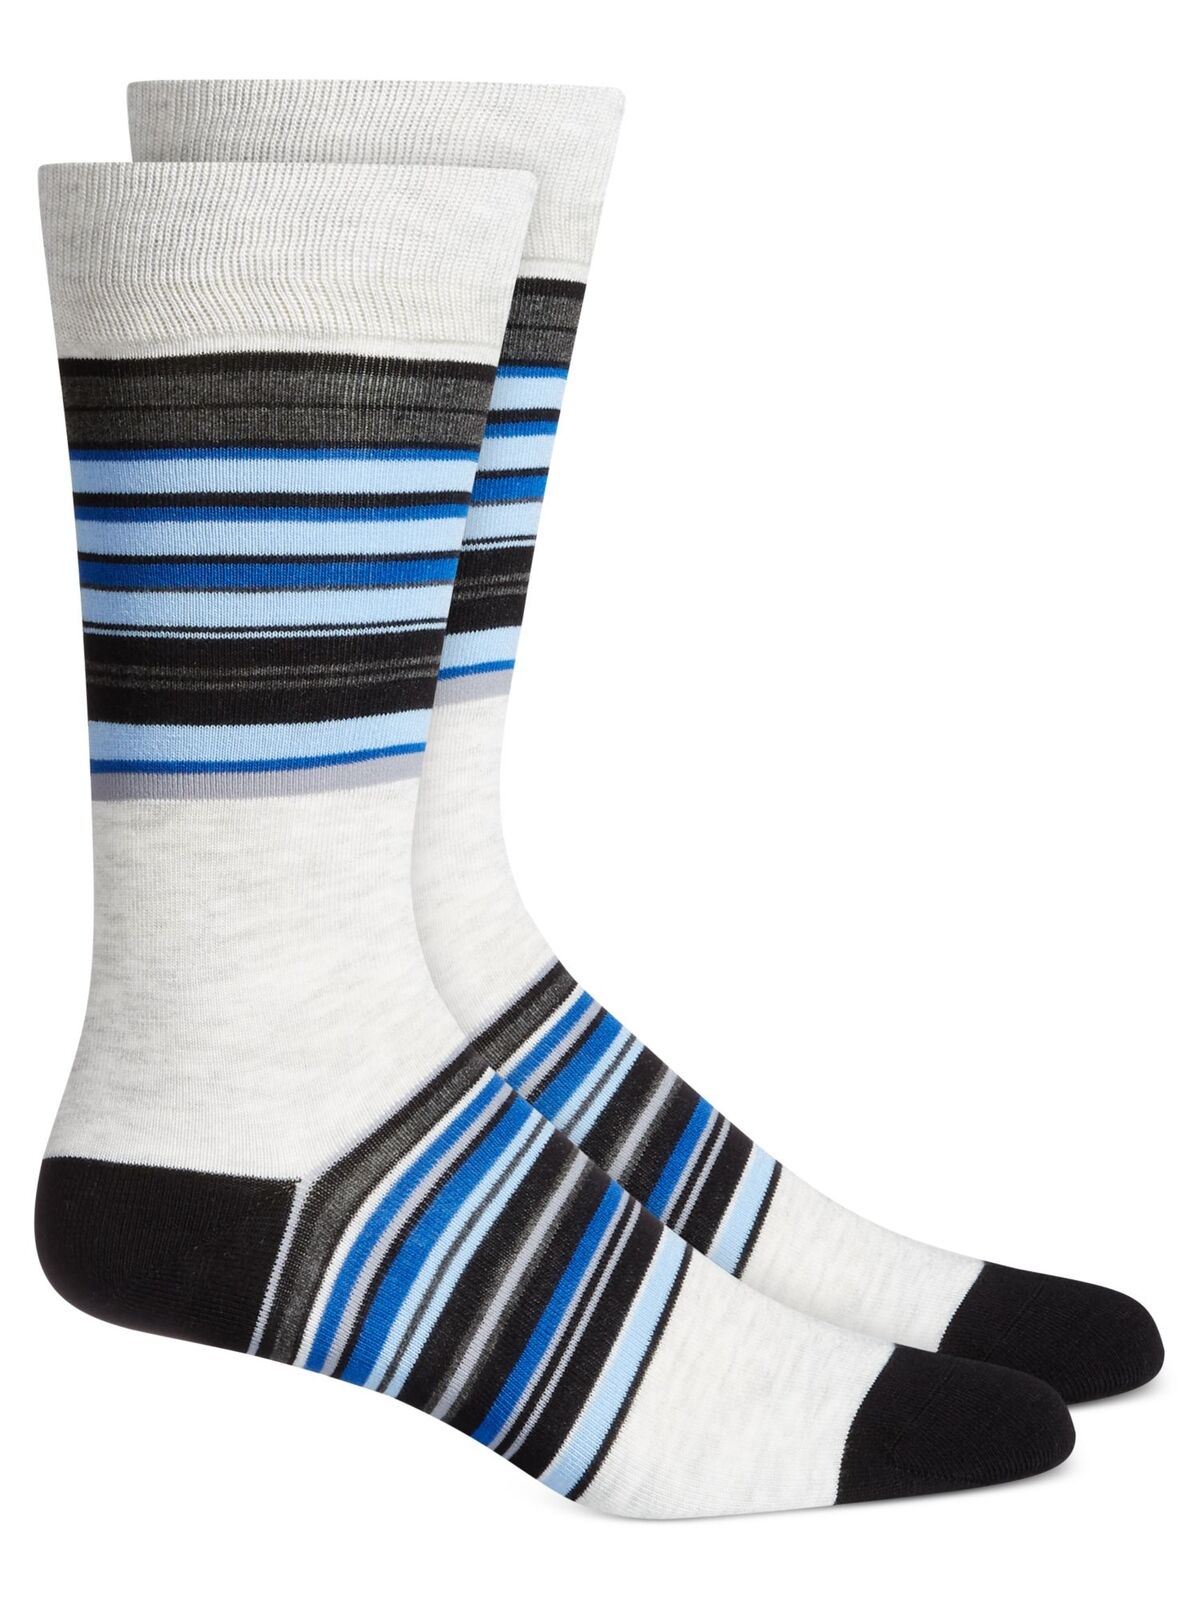 ALFANI Mens Eternal Comfortable Seamless Dress Crew Socks  Color Blue Striped  Size 10-13